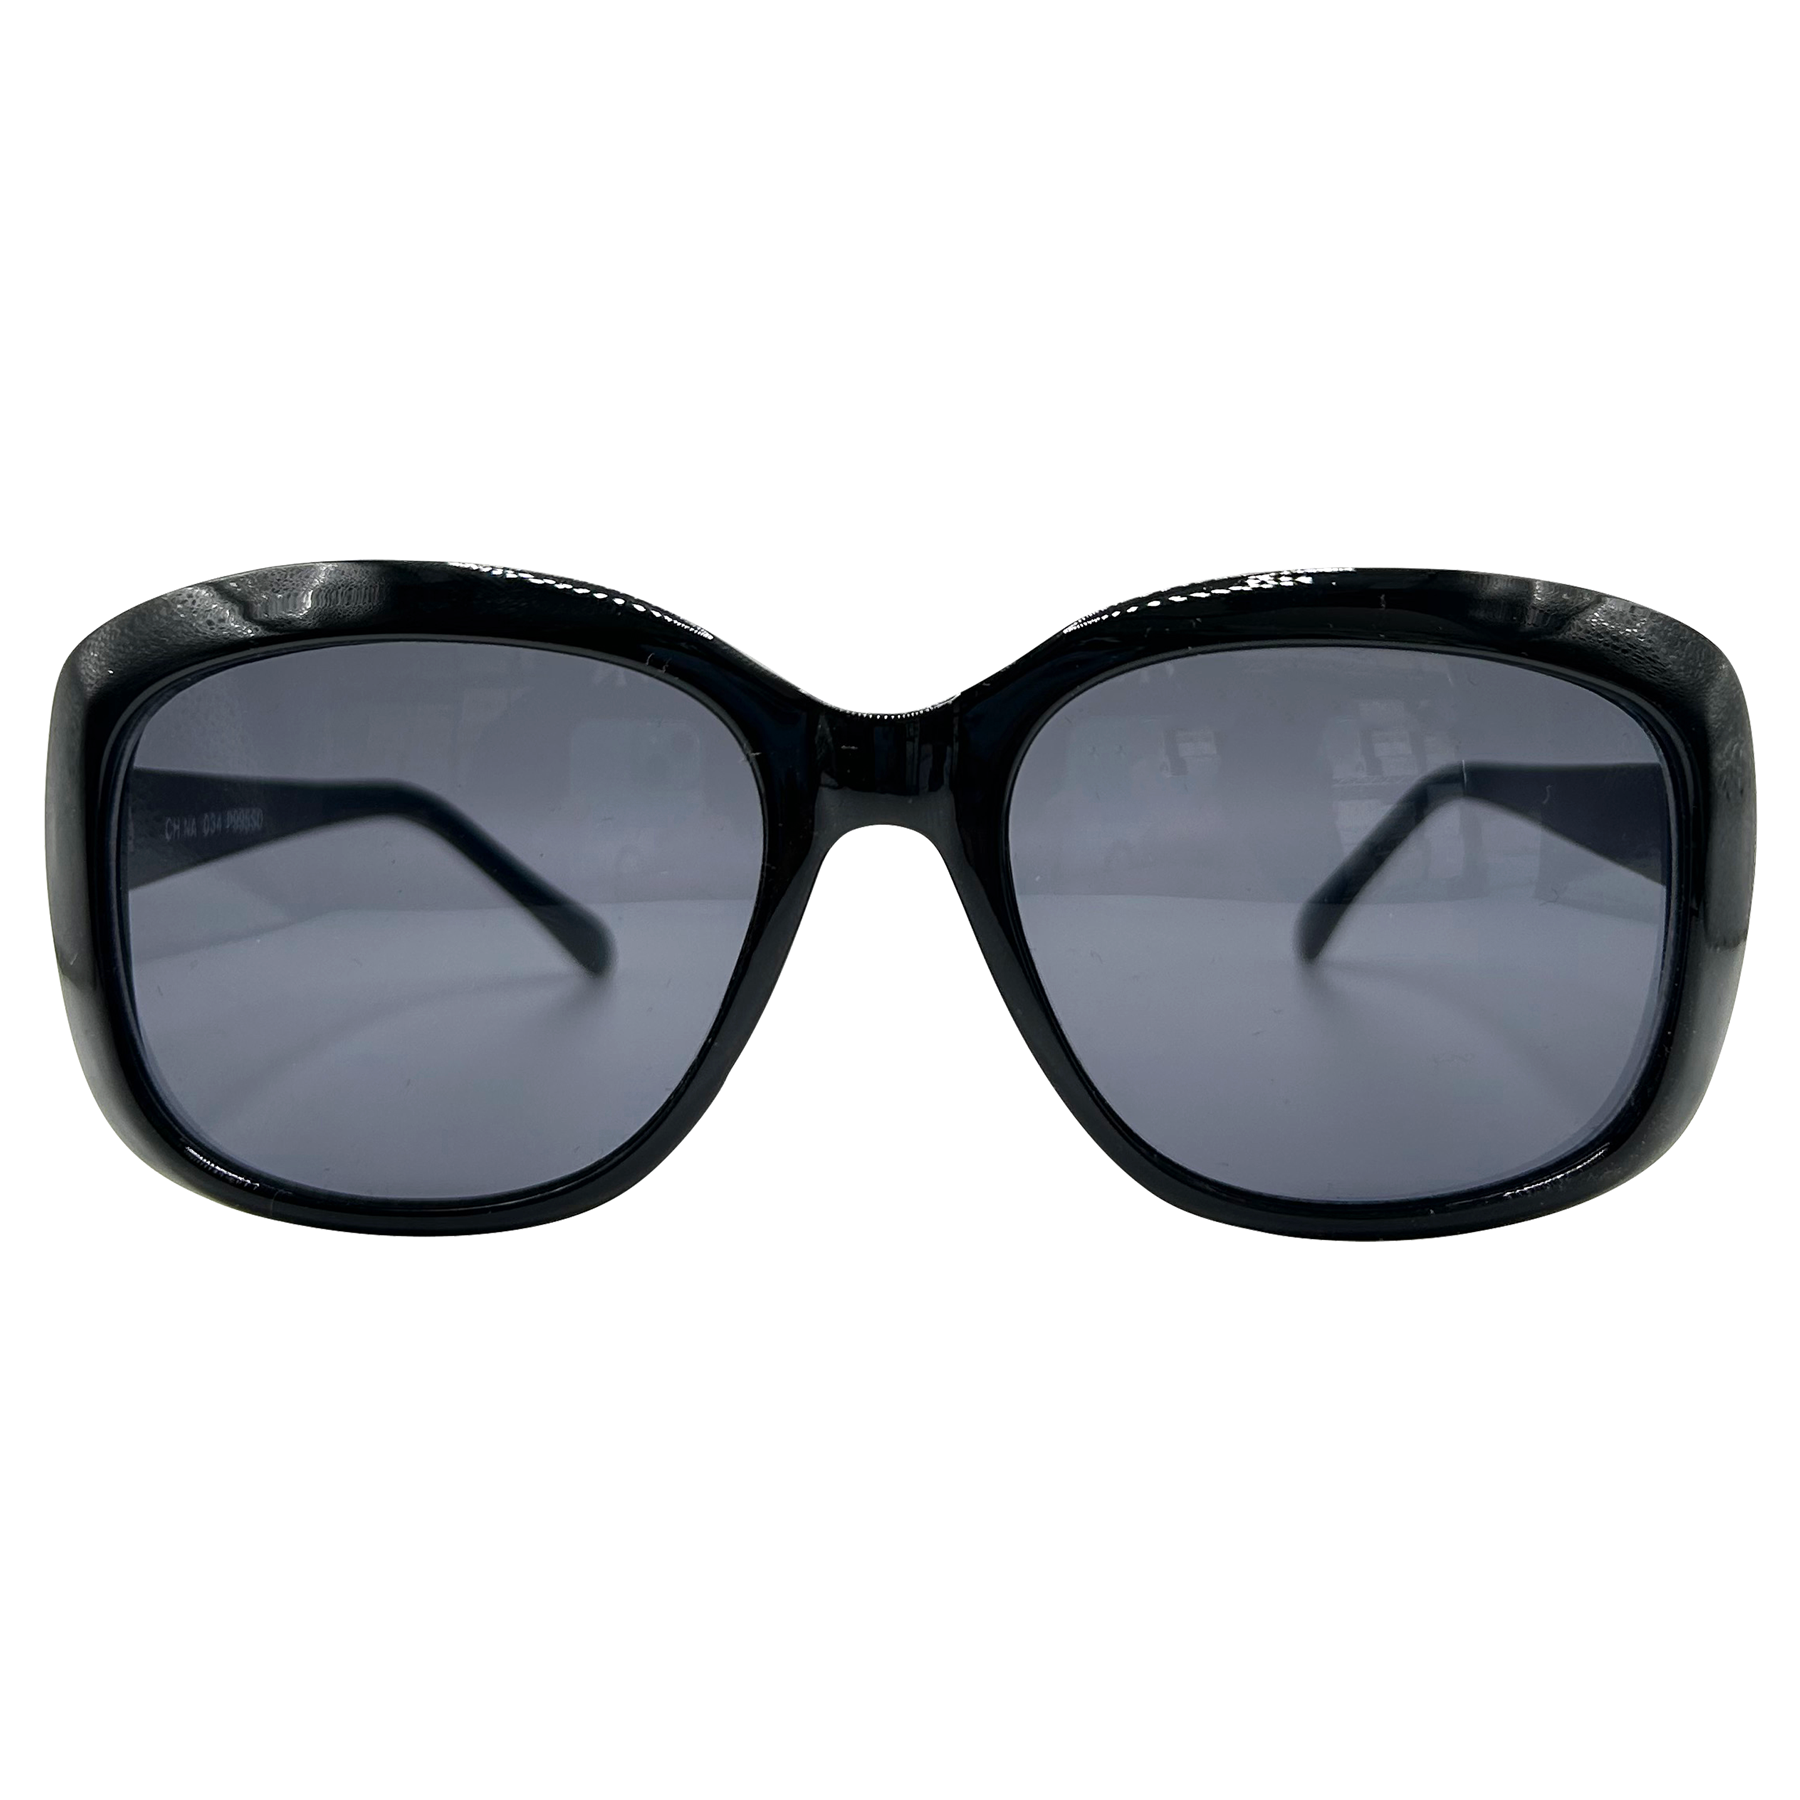 BLAKE Black/Super Dark Square Sunglasses